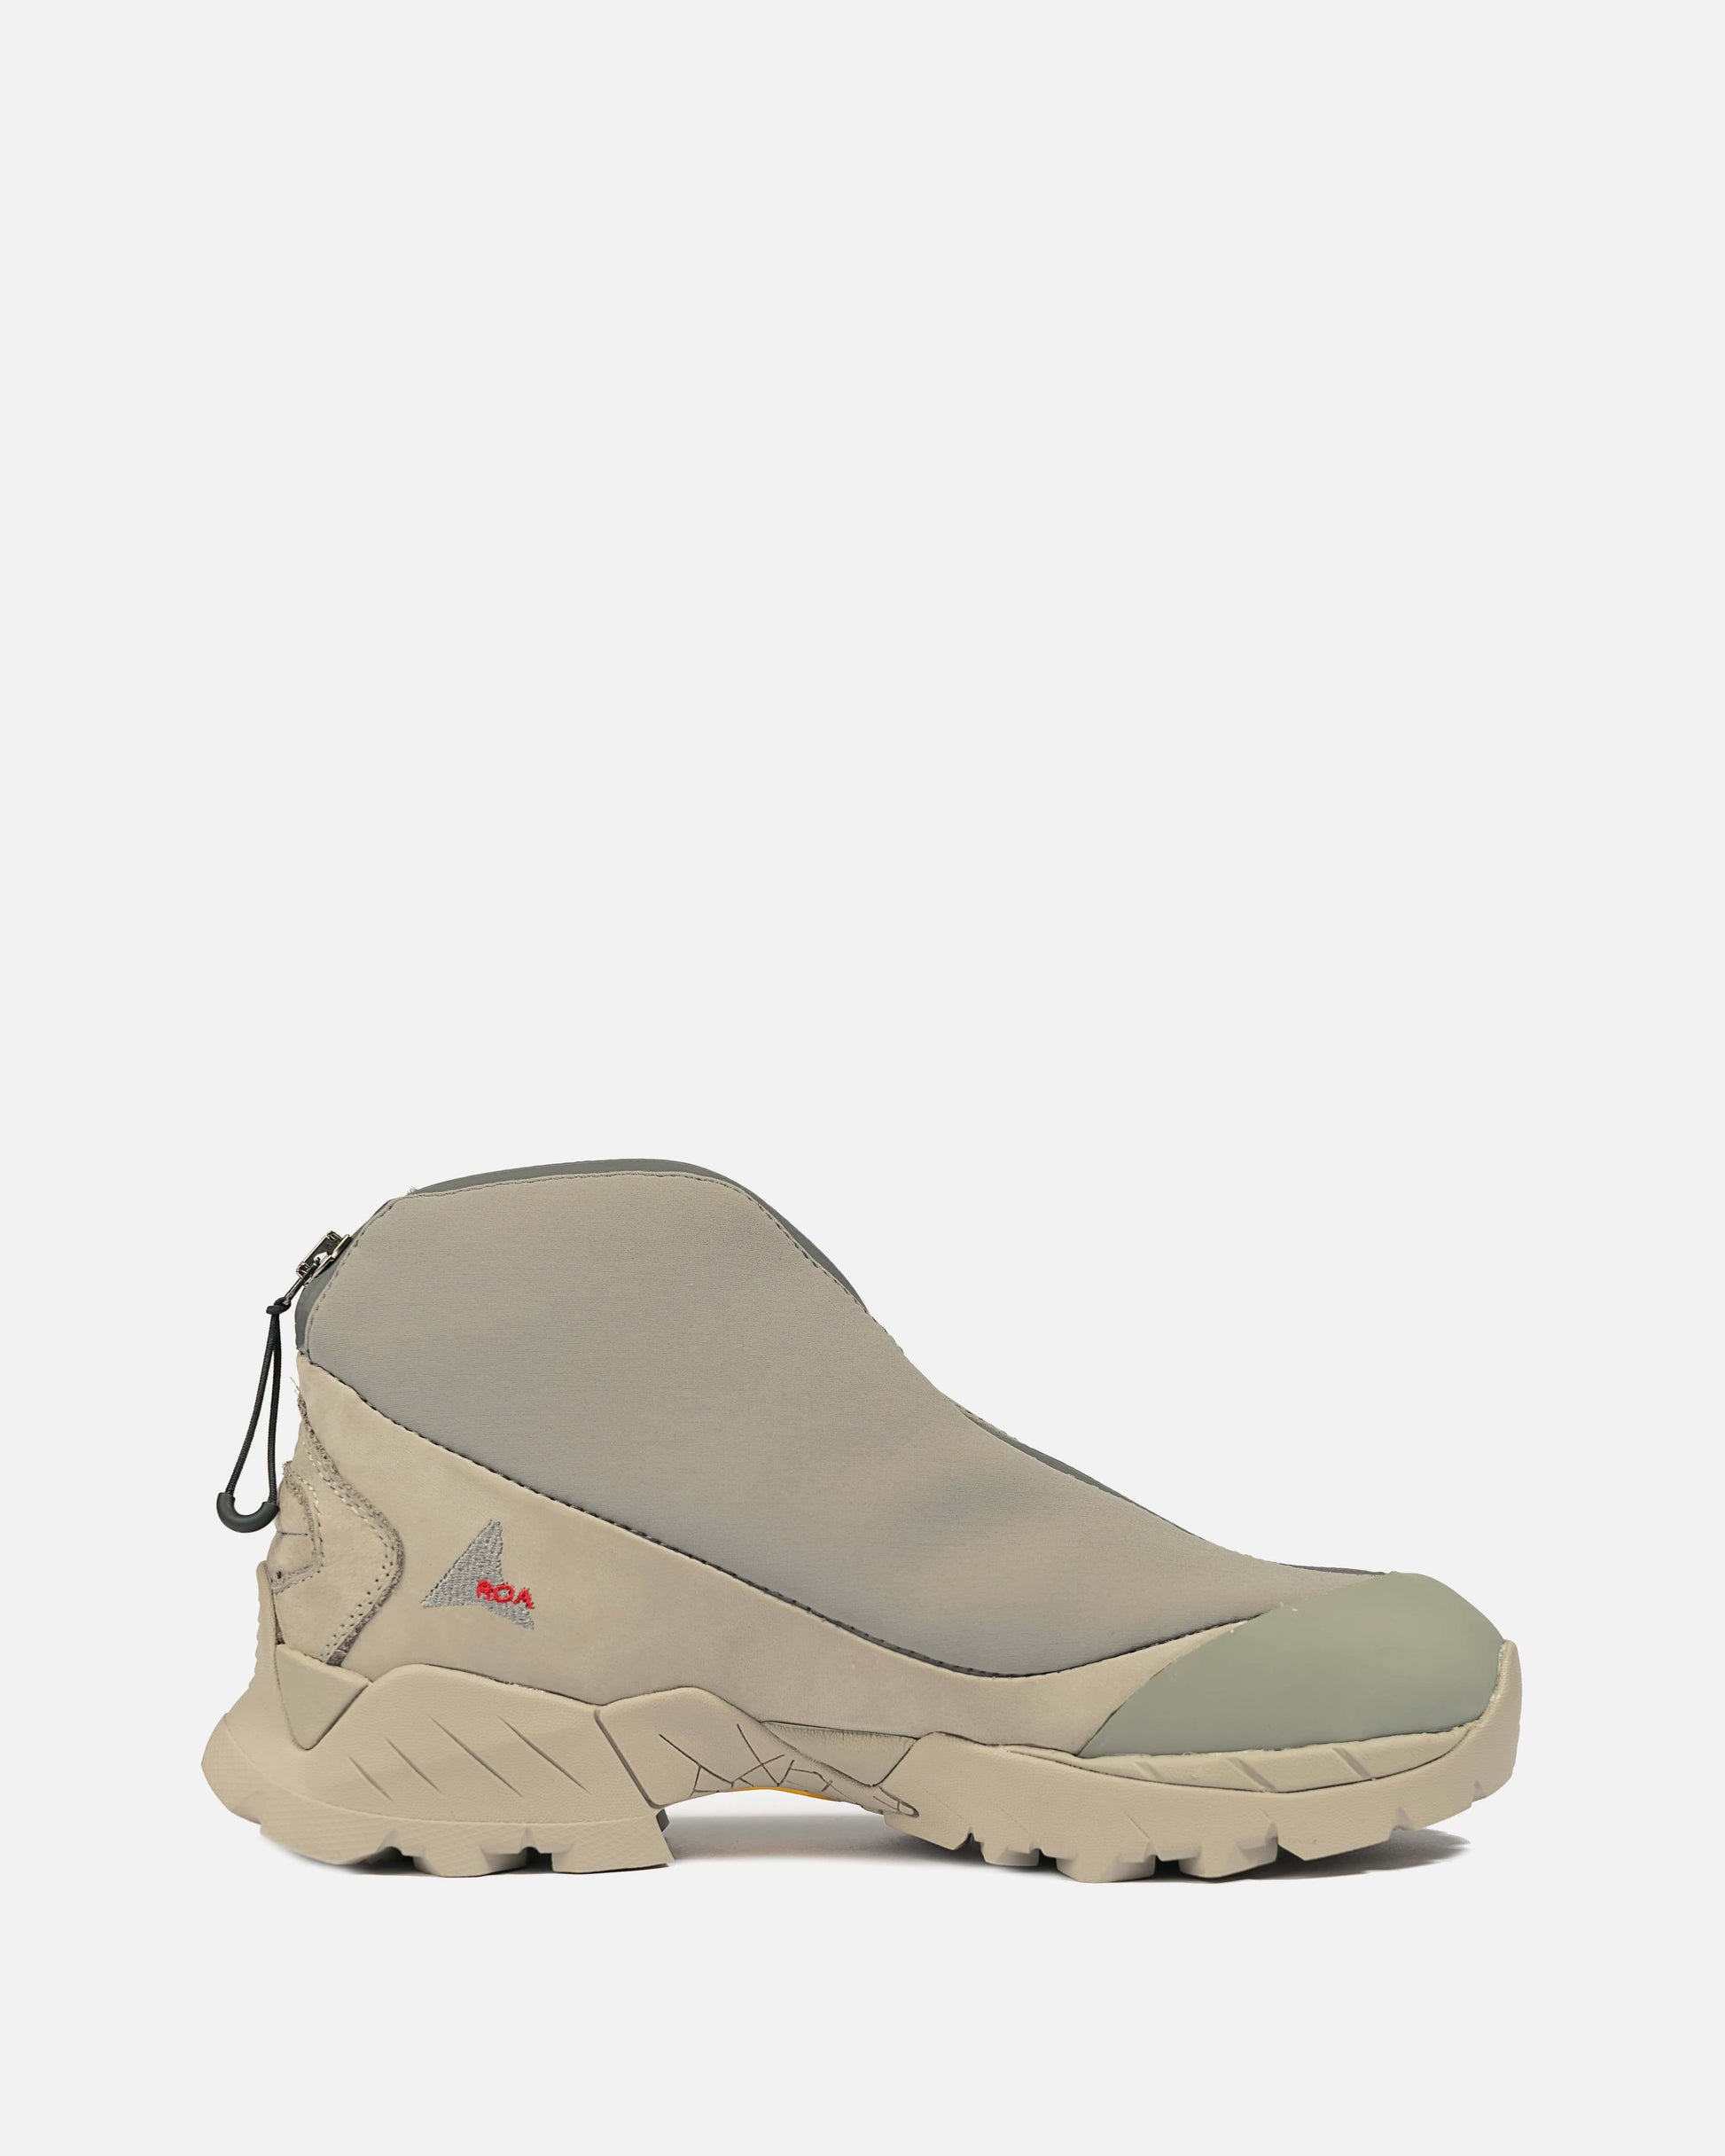 Roa Men's Boots Teri Sneakers in Grey